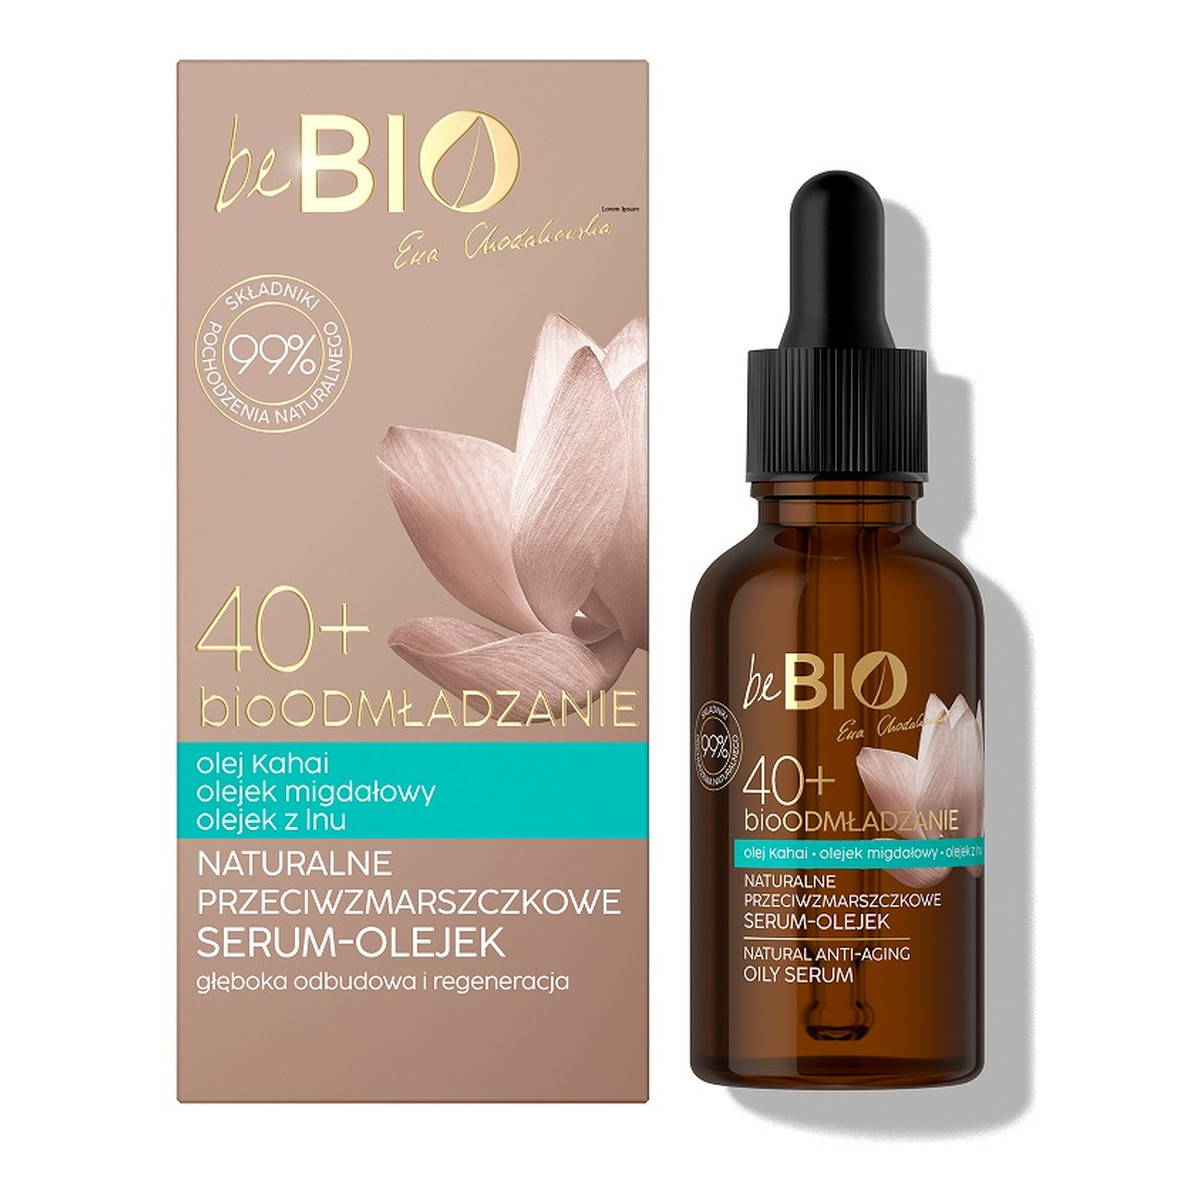 Be Bio Ewa Chodakowska Hyaluro bioodmładzanie 40+ naturalne serum-olejek do twarzy 30ml